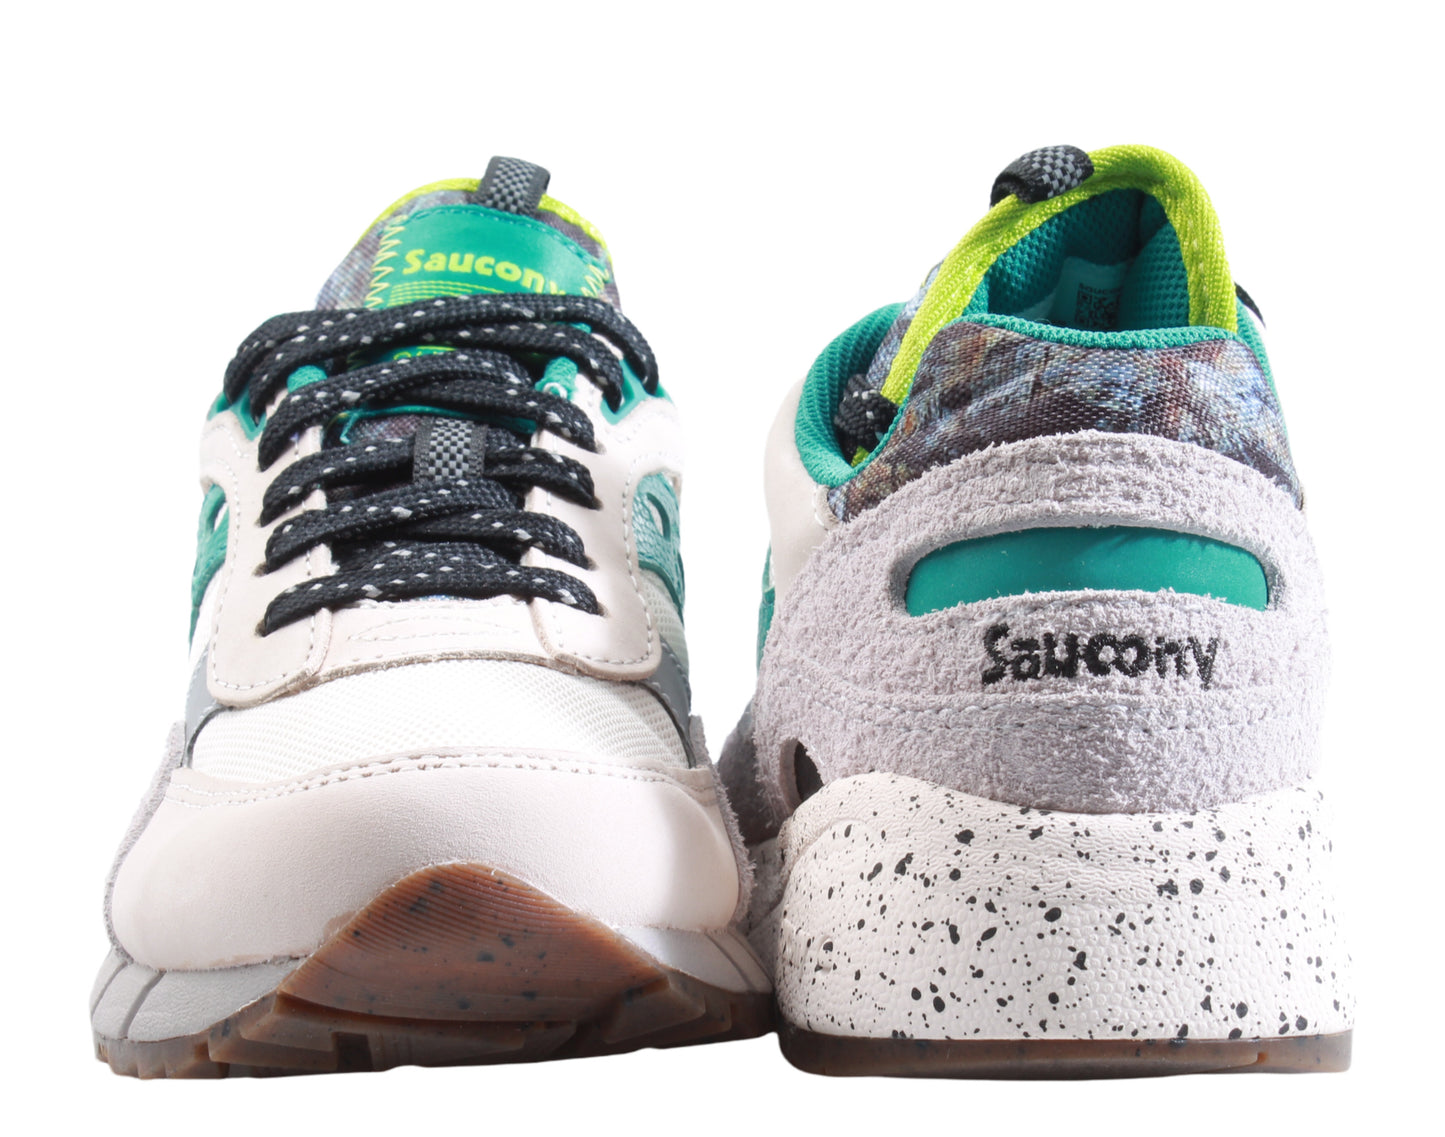 Saucony Originals Shadow 6000 - Camo Reflective Pack - Running Shoes